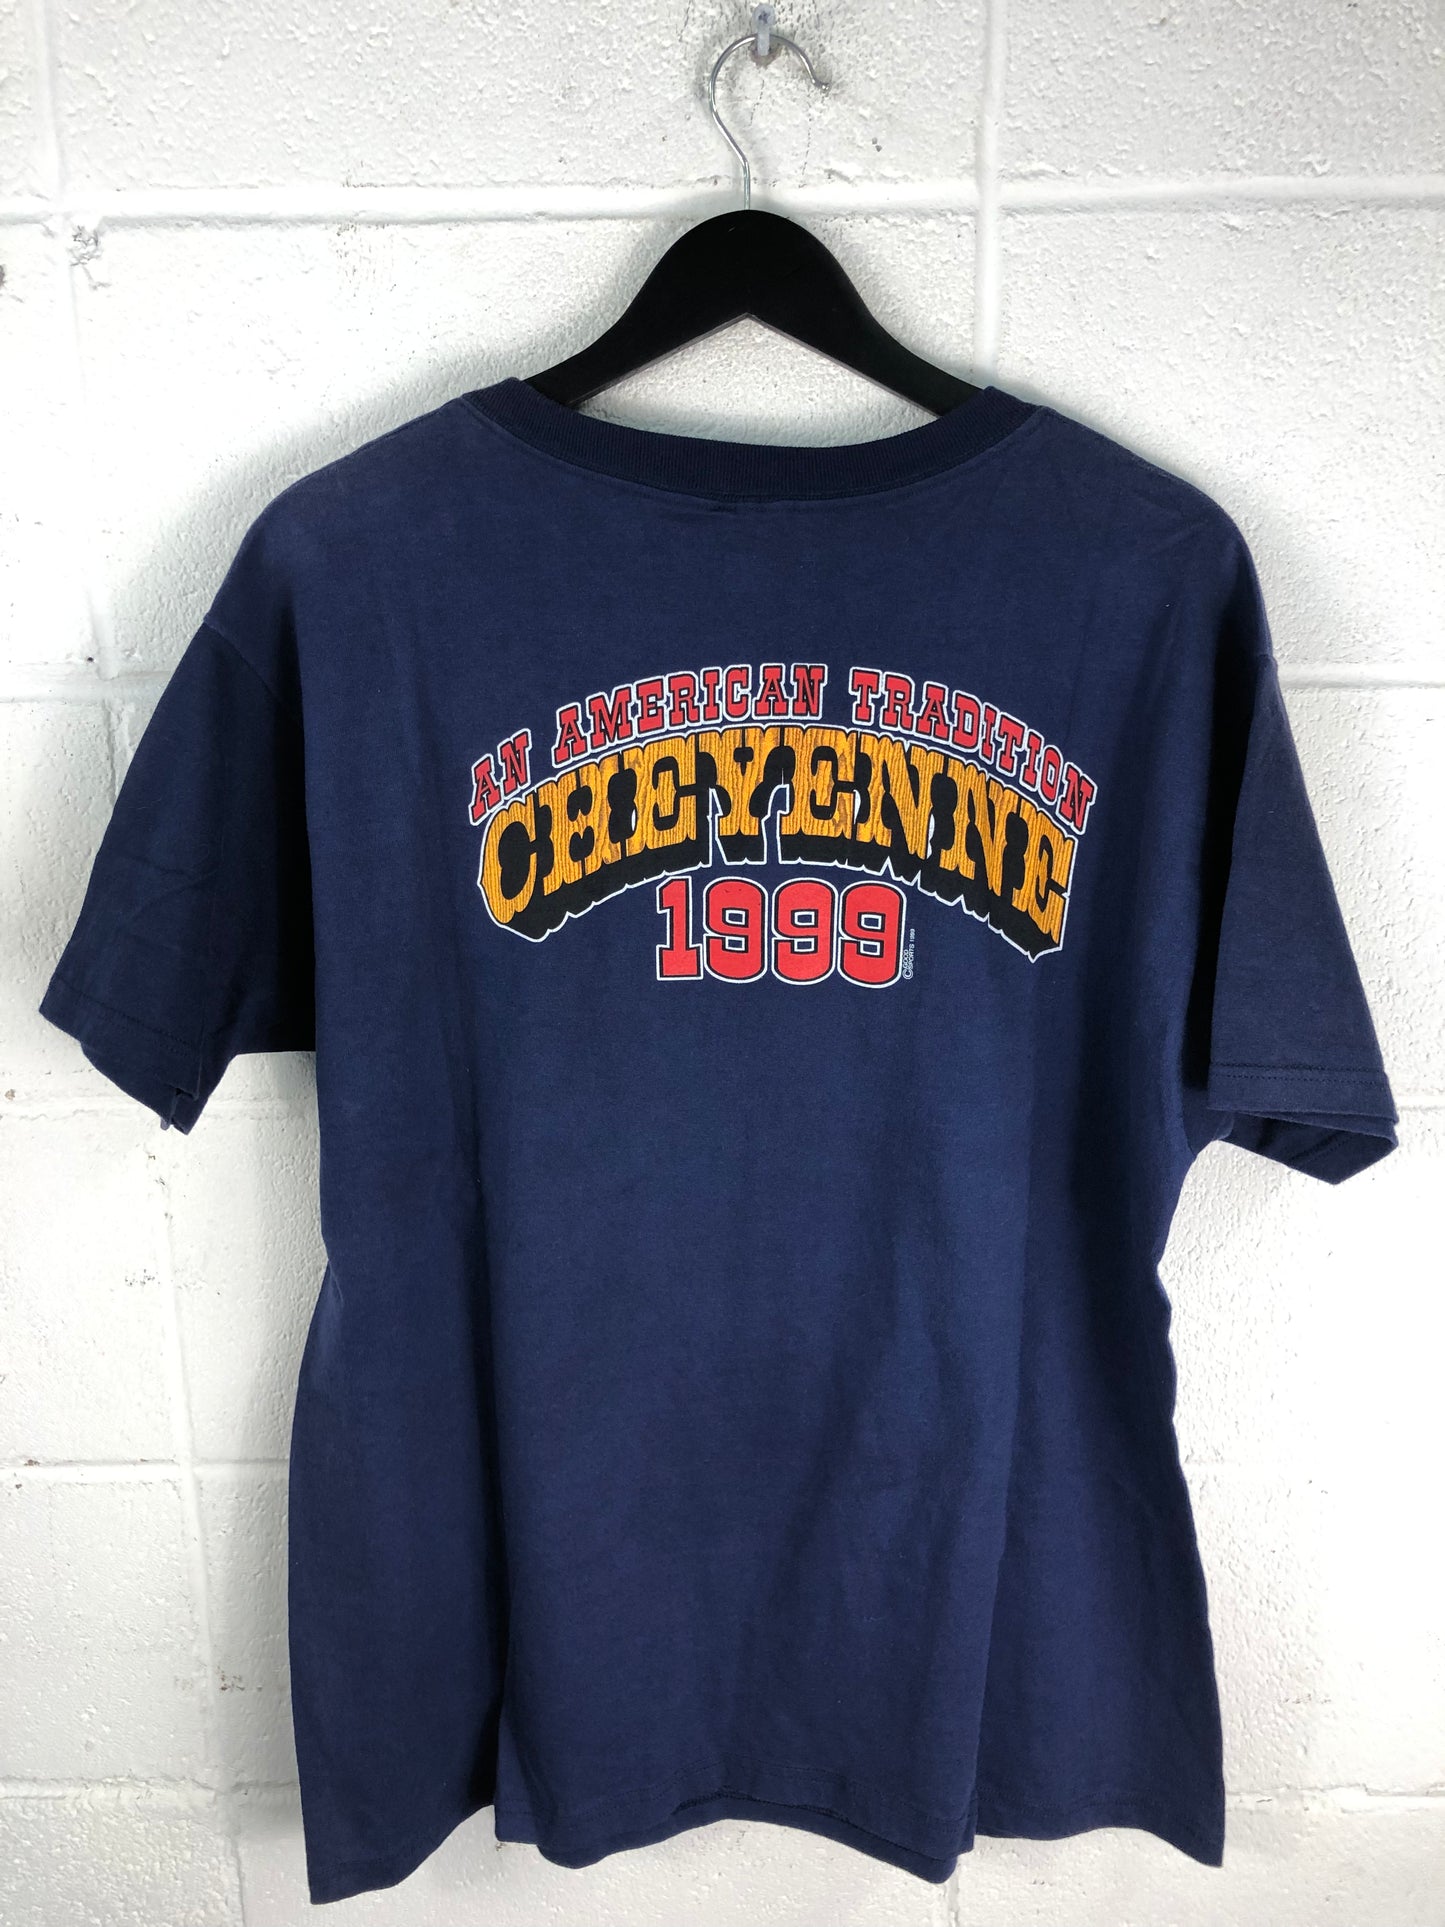 Vtg 1999 Cheyenne Millenium Tee Sz XL